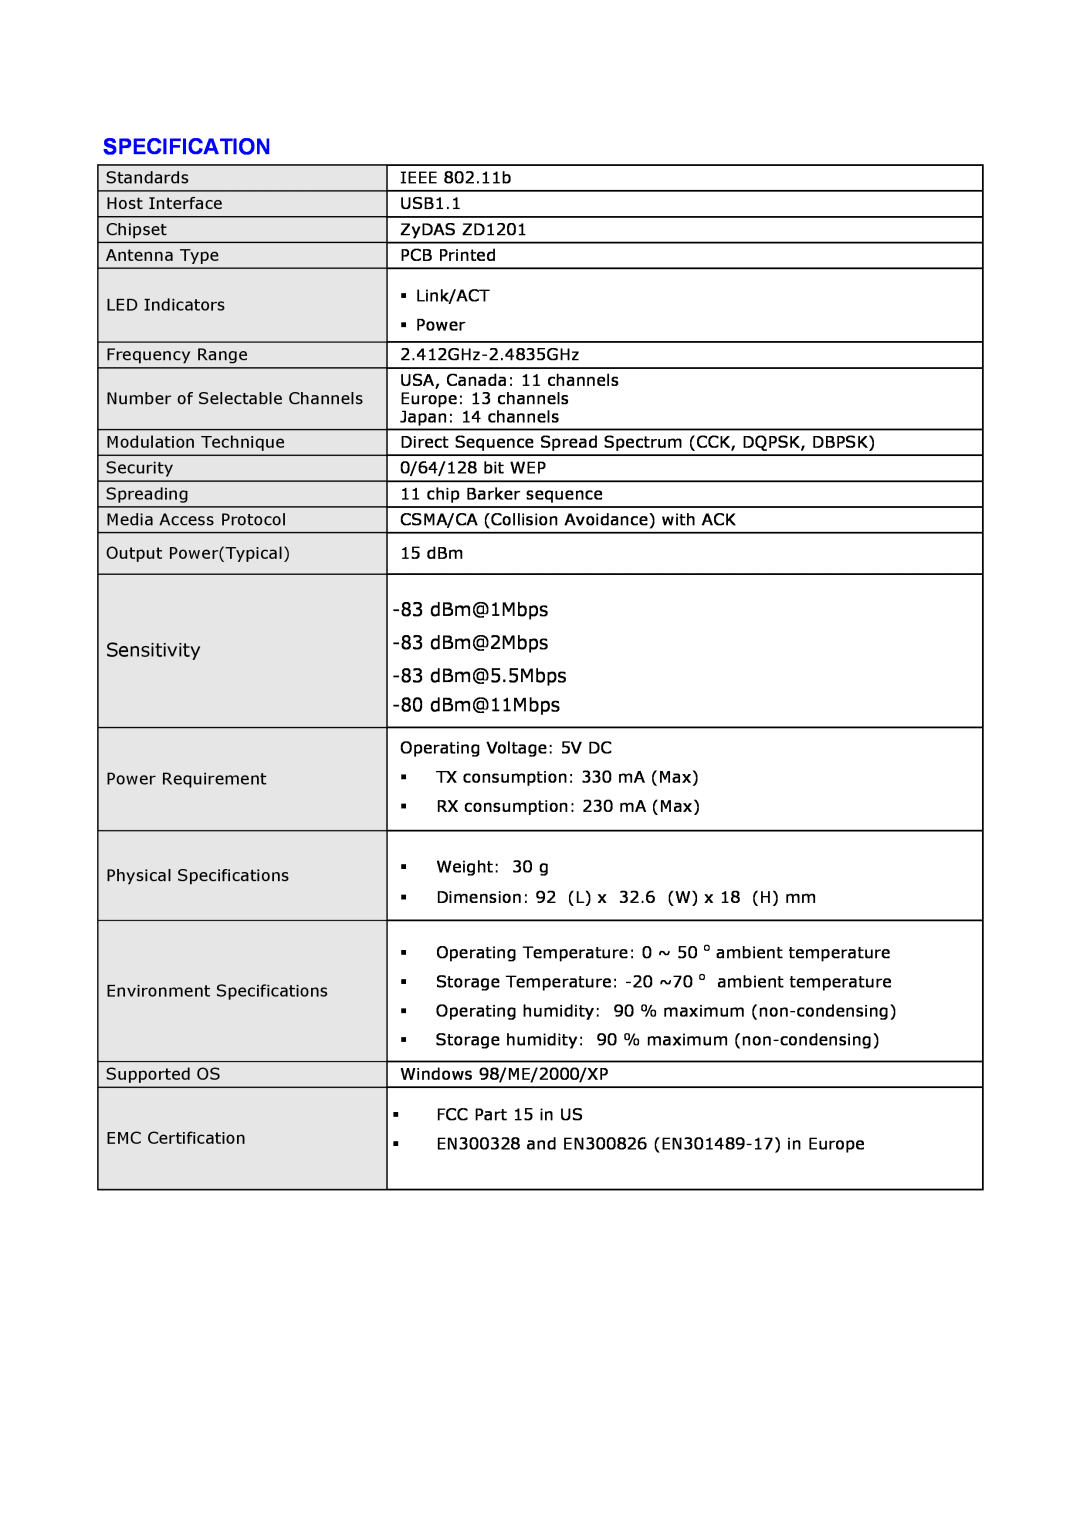 Abocom WUB1600 manual Specification, 83 dBm@1Mbps, Sensitivity, 83 dBm@2Mbps, 83 dBm@5.5Mbps, 80 dBm@11Mbps 